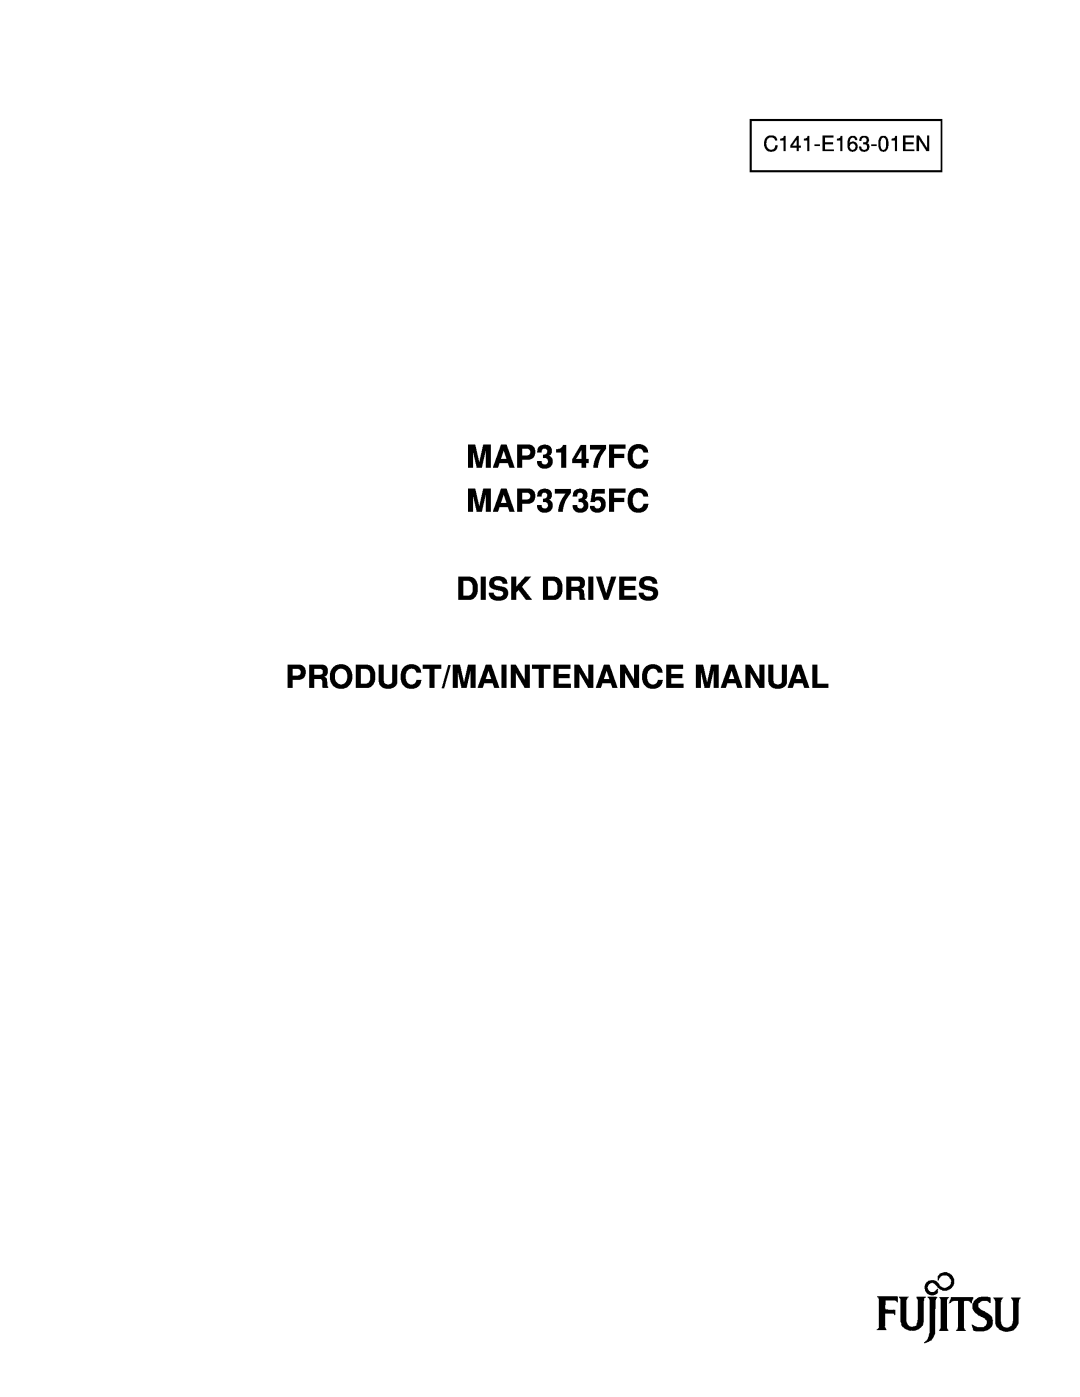 Fujitsu manual MAP3147FC MAP3735FC DISK DRIVES PRODUCT/MAINTENANCE MANUAL, C141-E163-01EN 